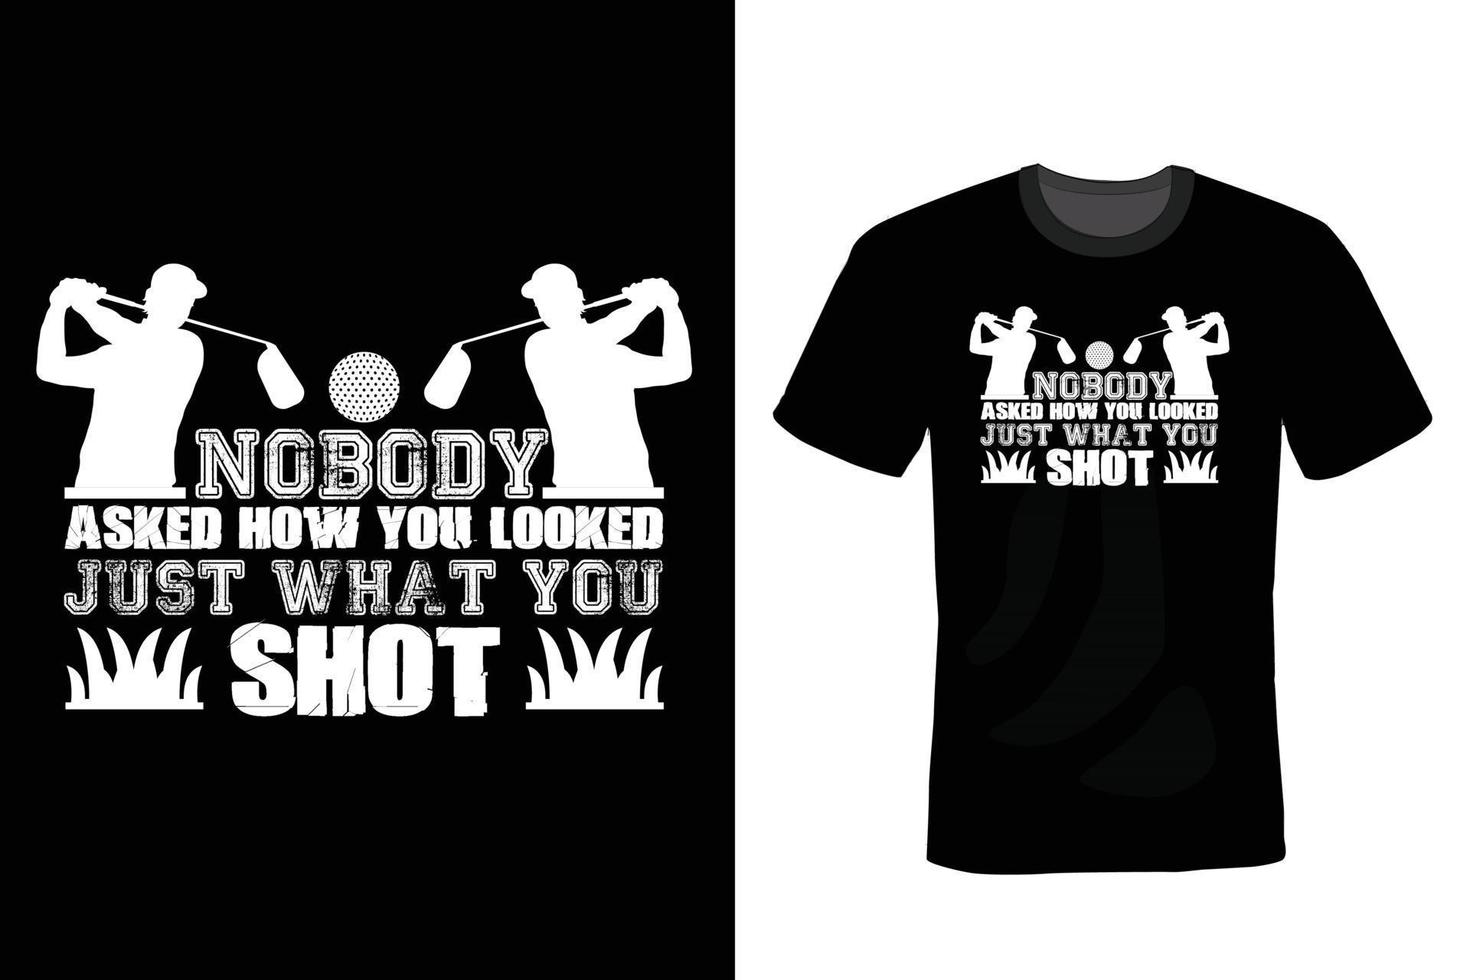 Golf T shirt design, vintage, typography vector